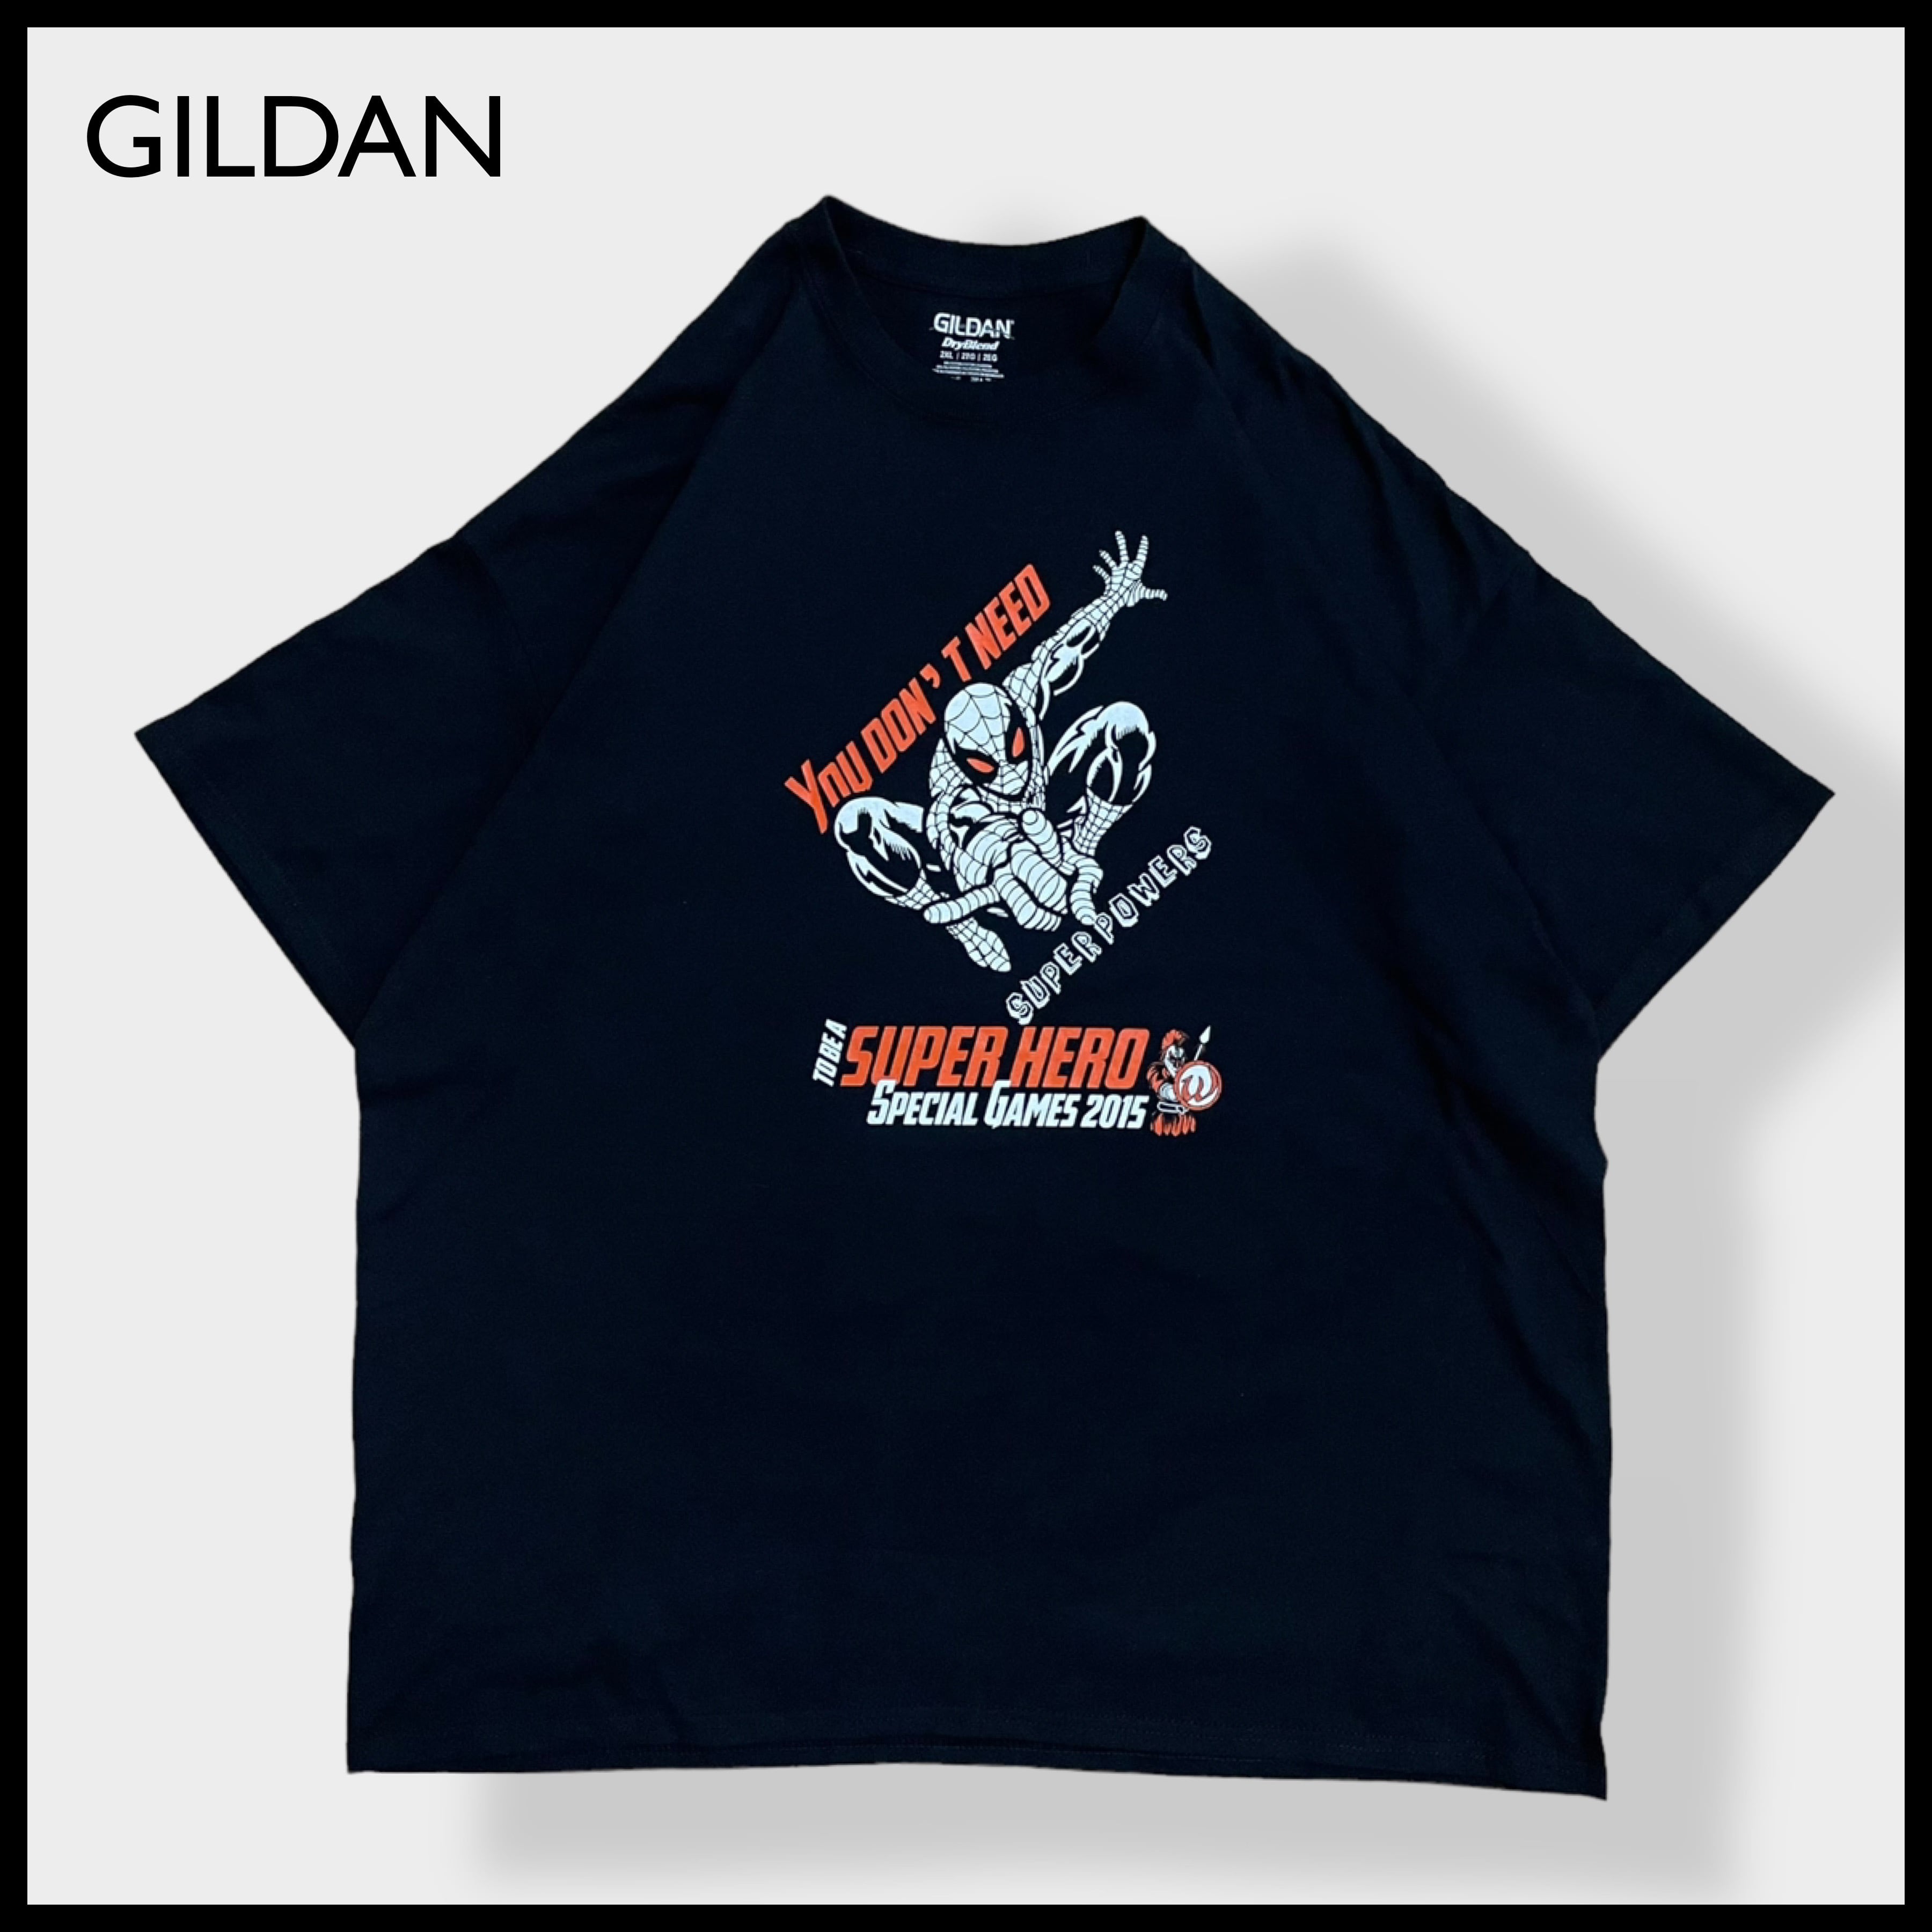 GILDAN】スパイダーマン プリント Tシャツ ロゴ 黒t 半袖 2X-LARGE ...